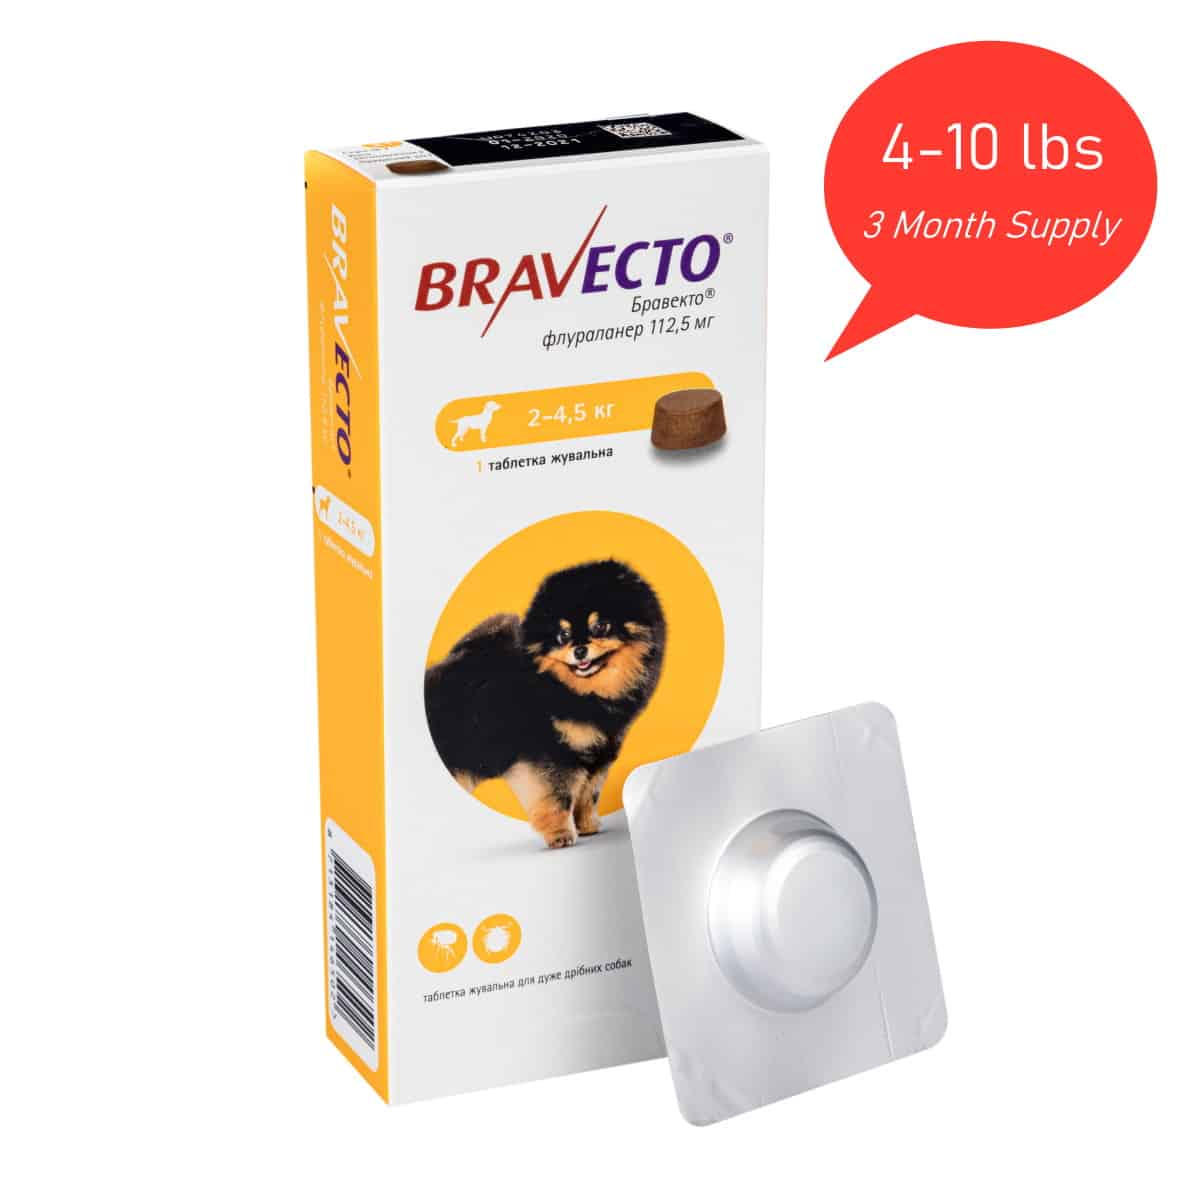 Buy Bravecto Chew (4.5-10kg Dogs  10-20kg Dogs) Online In Nigeria